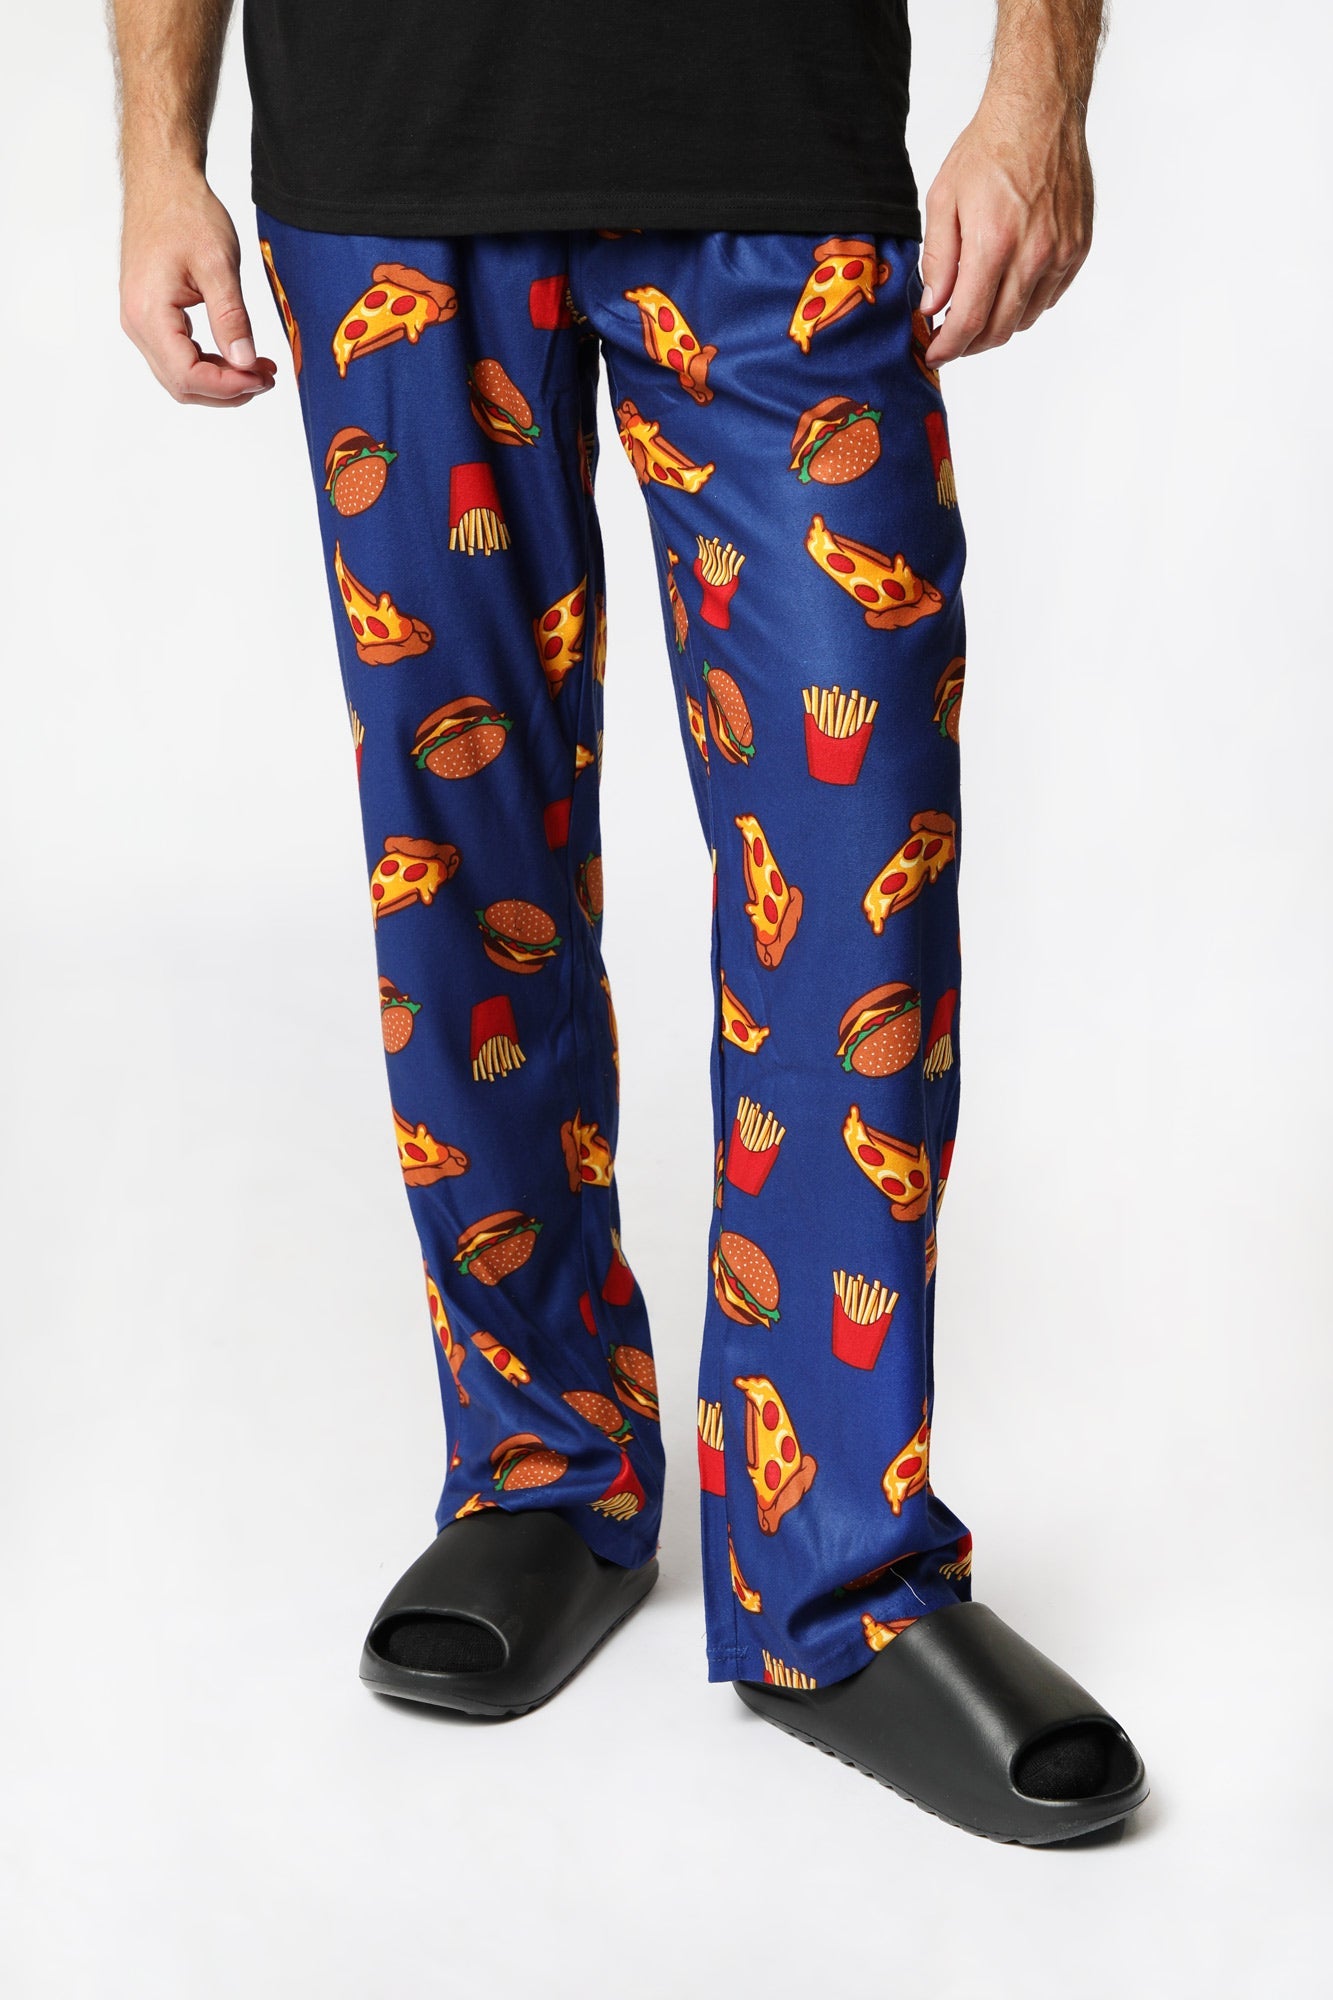 Snake Skin Pajama Pants Mens Lounge Pants Casual Men Pajama Bottoms with  Drawstring & Pockets Size S at  Men's Clothing store